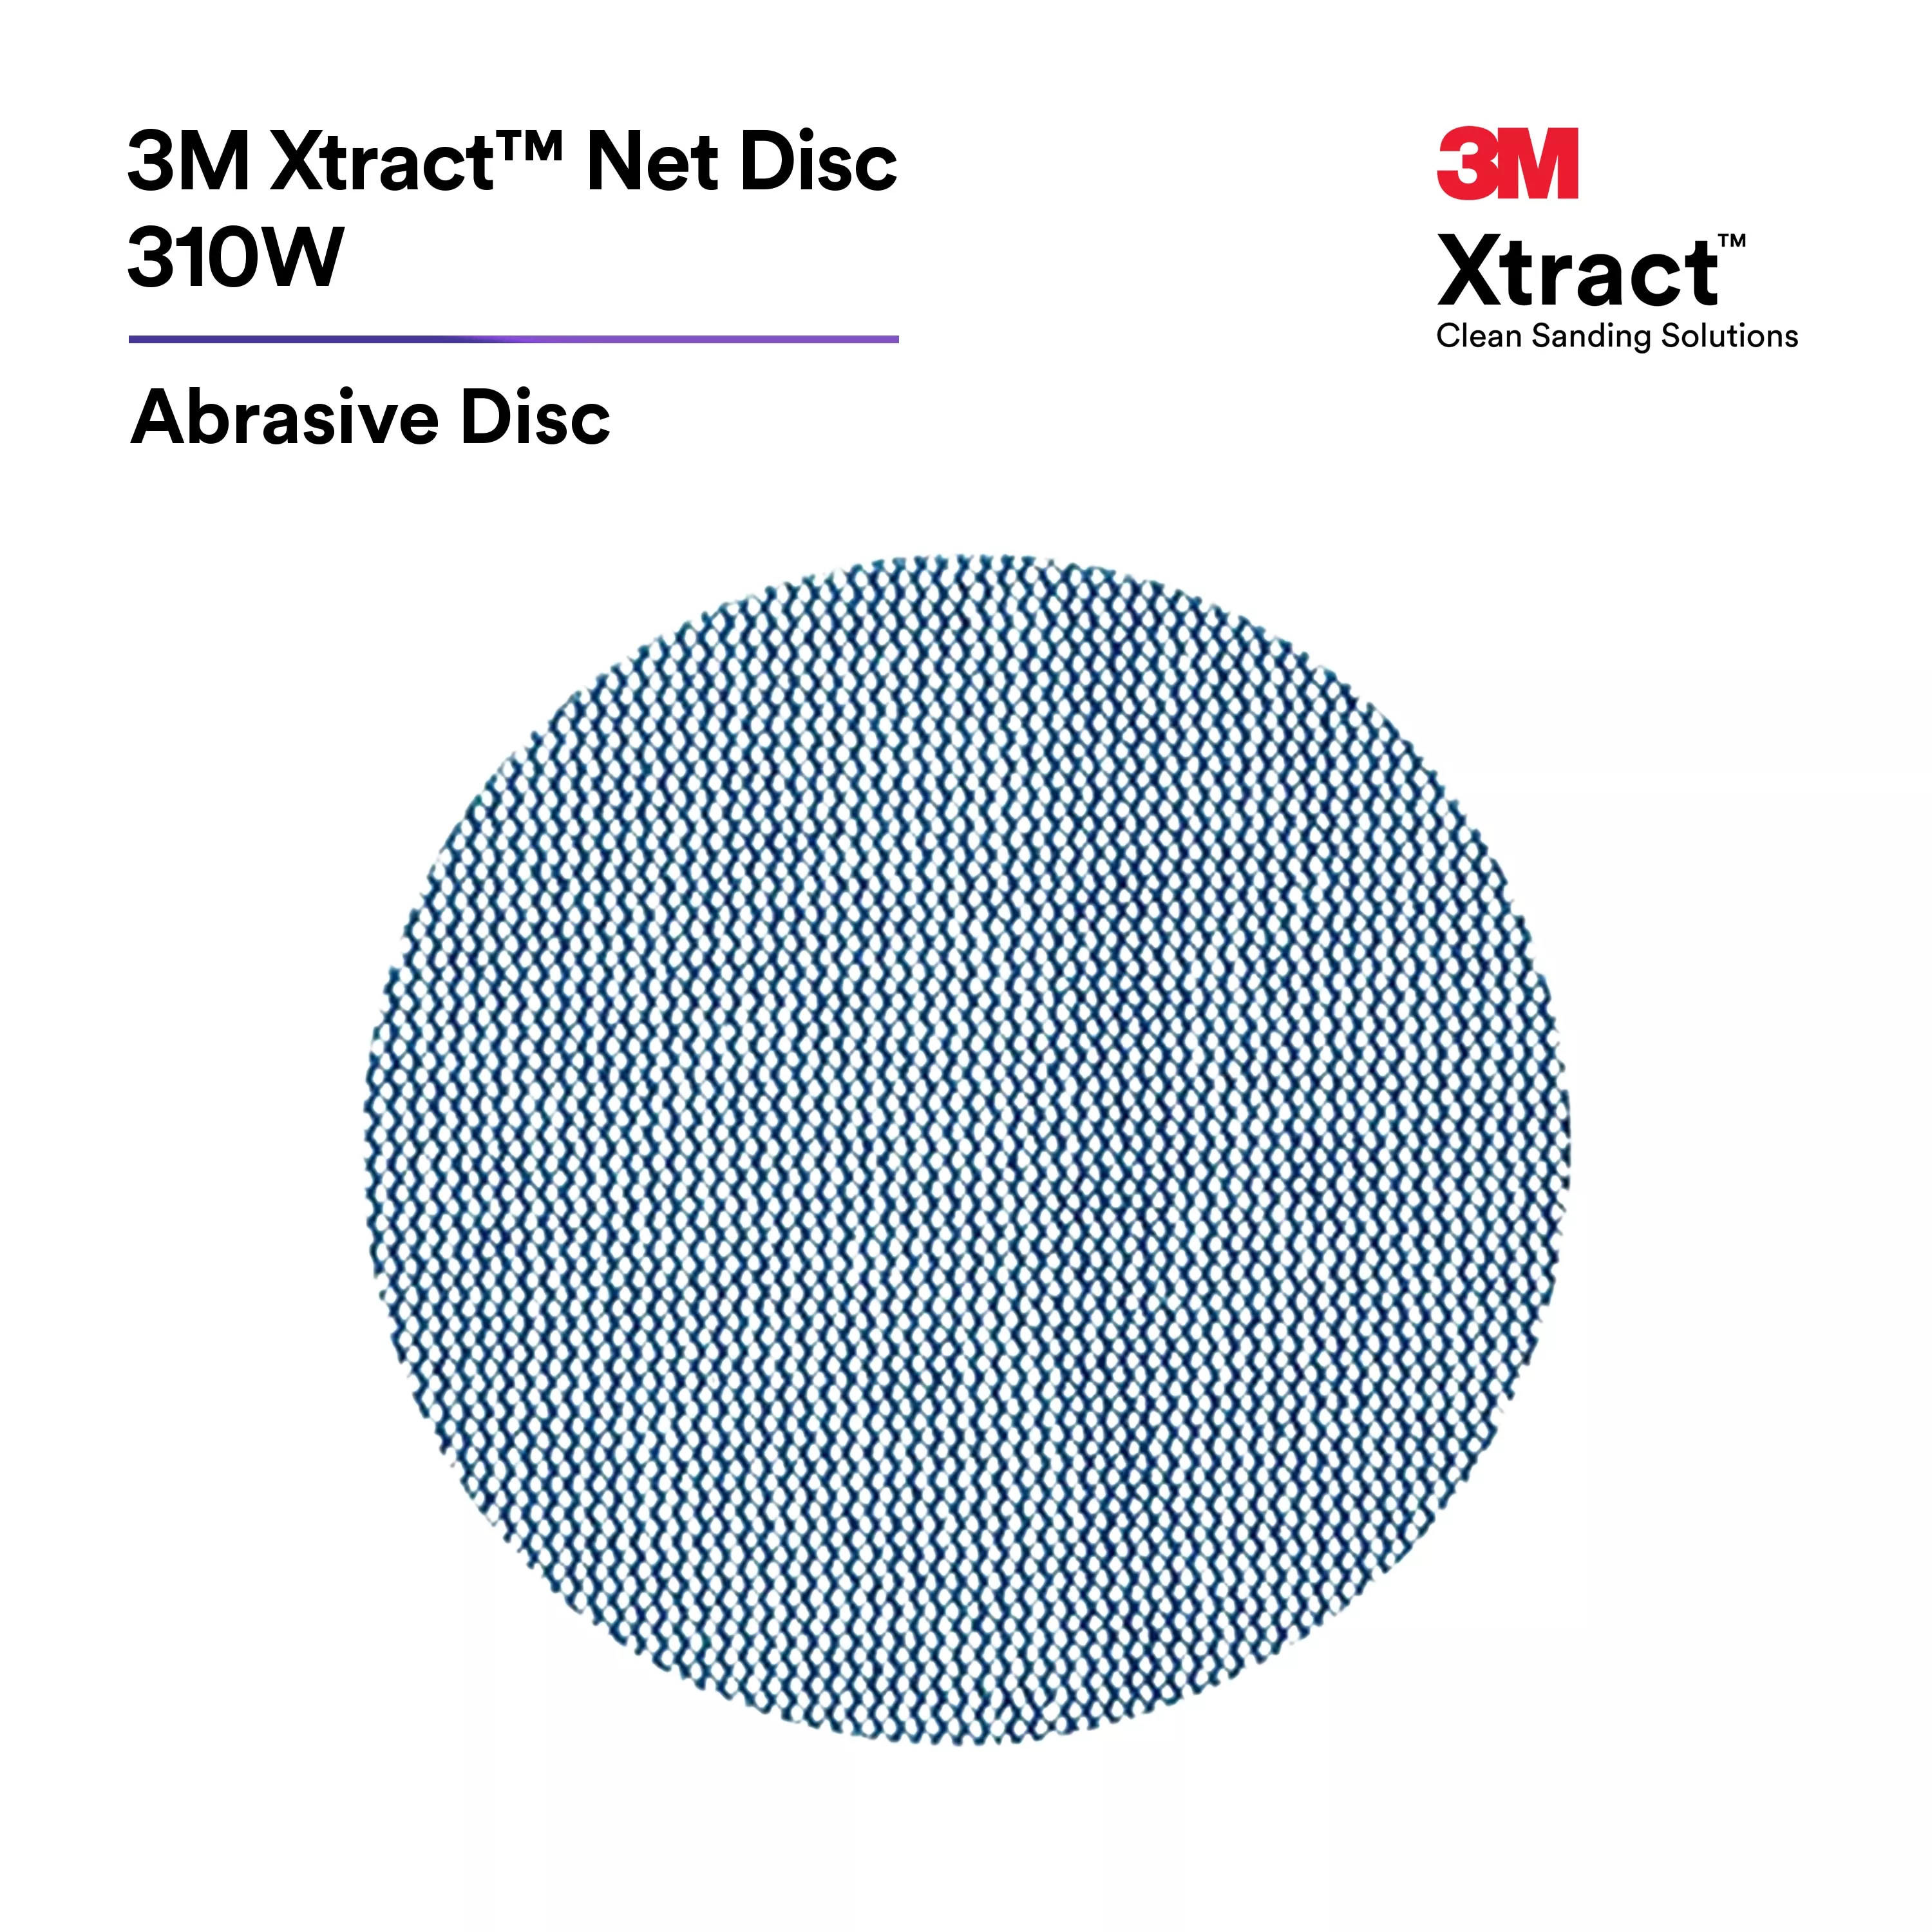 SKU 7100247522 | 3M Xtract™ Net Disc 310W